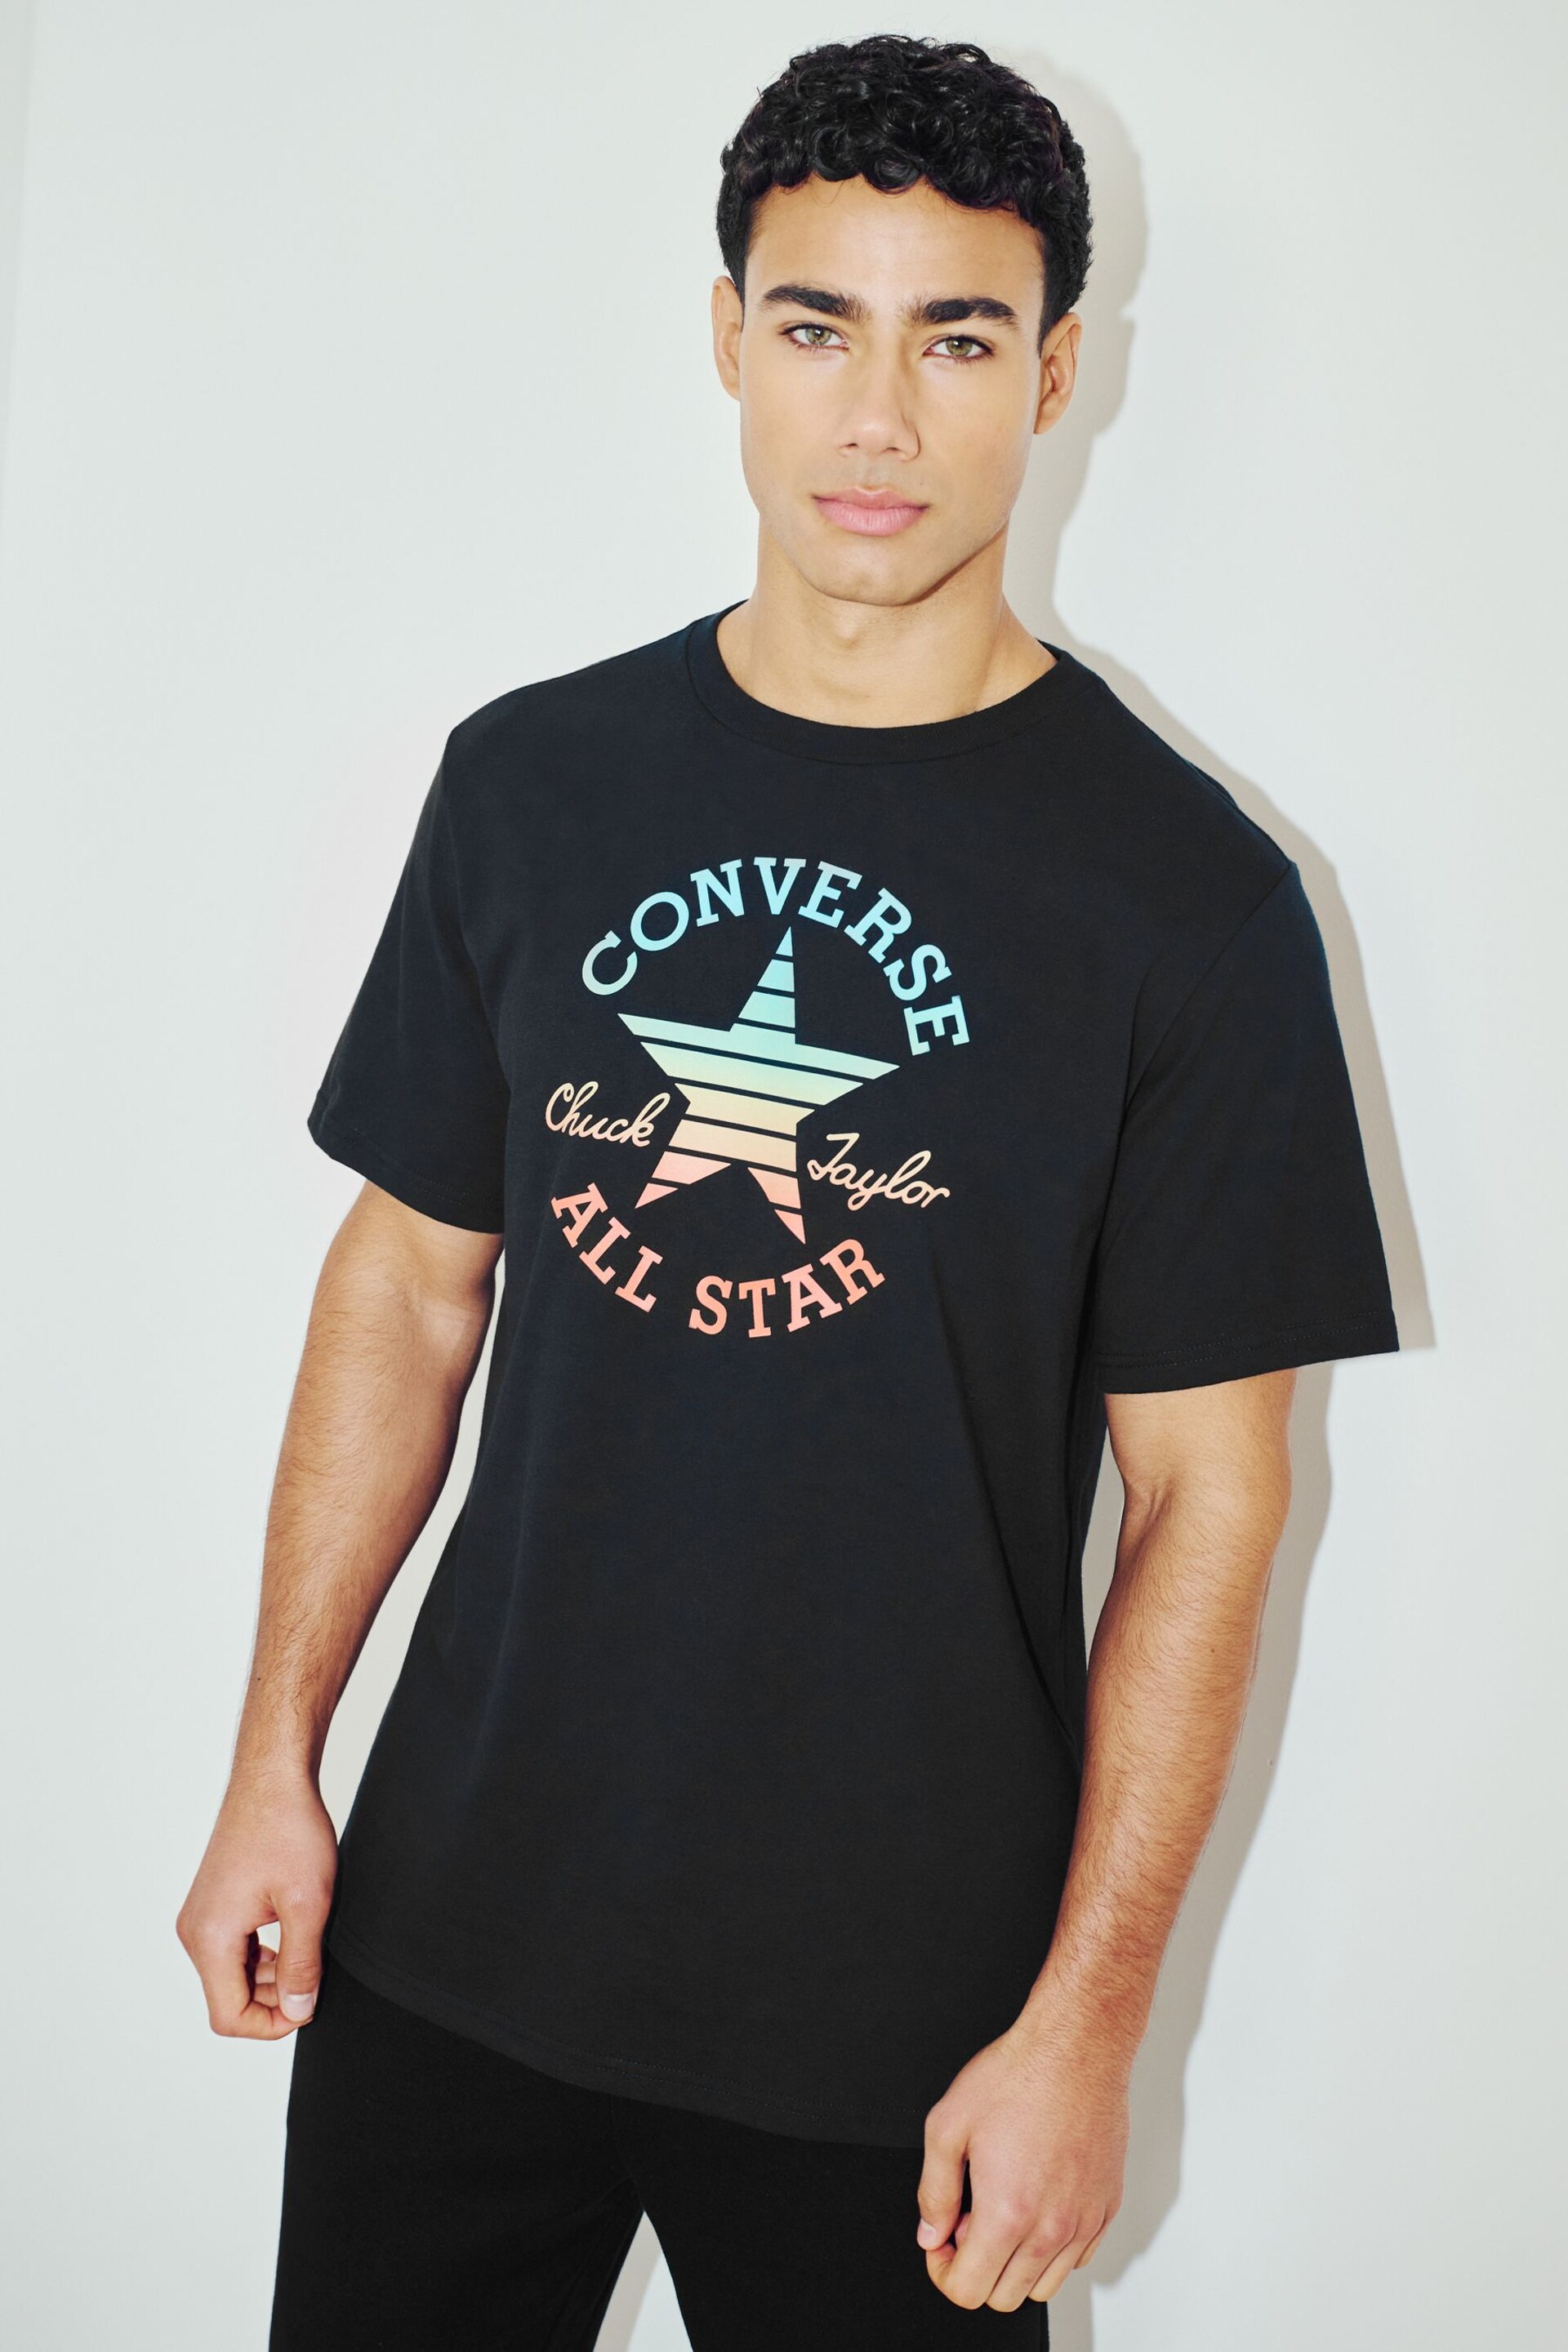 Converse Black Retro Chuck Patch Gradient Tshirt - Image 1 of 4